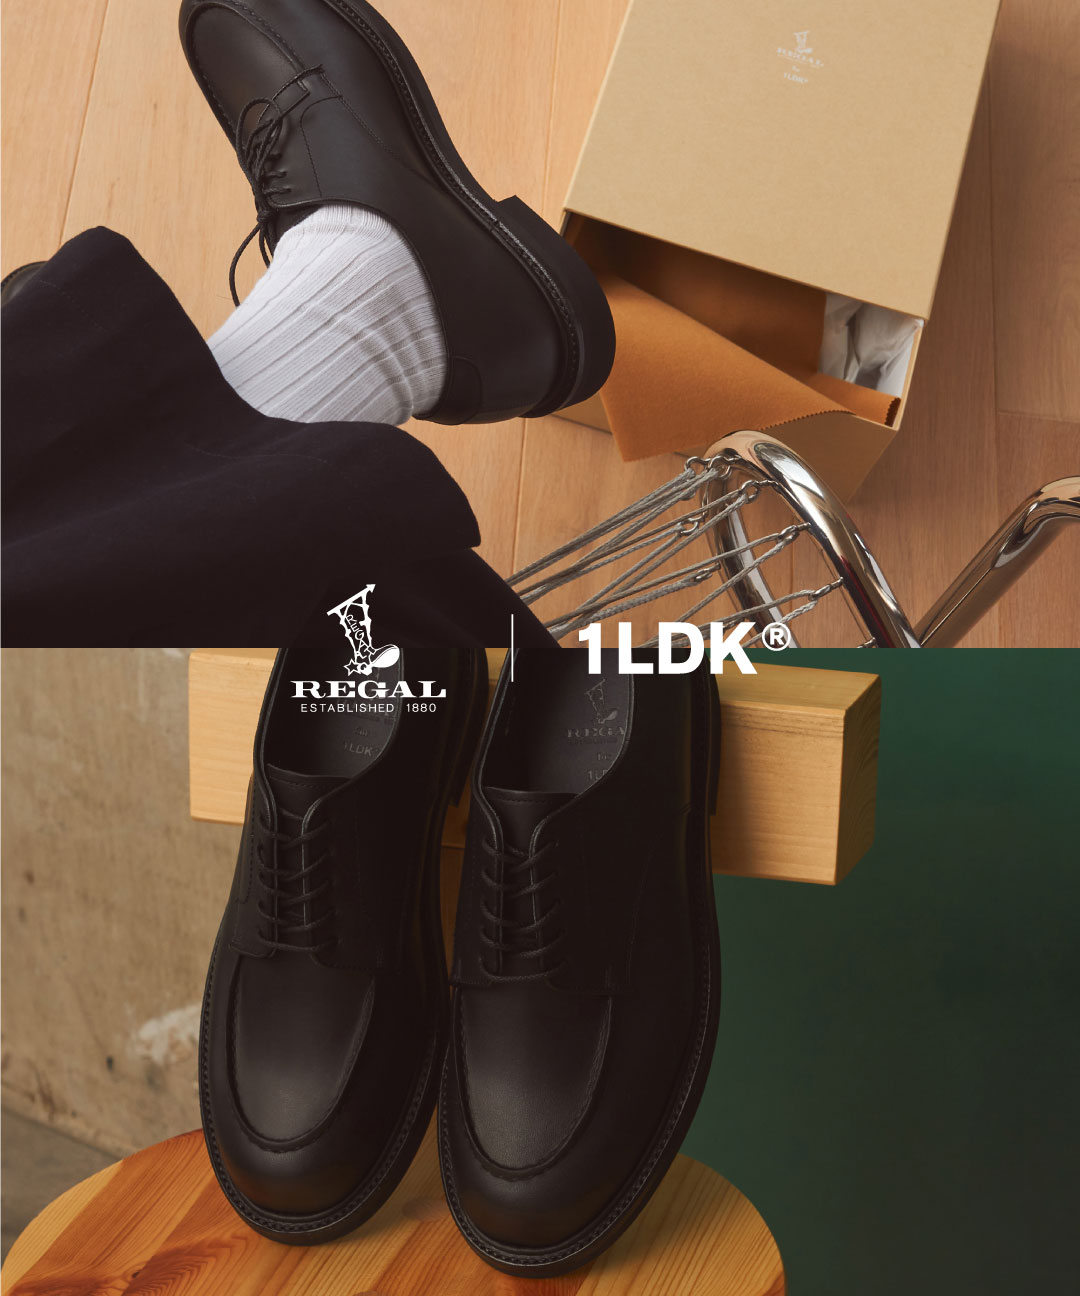 1LDK× REGAL Shoe \u0026 Co. U-tip GORE-TEXallweatherproof